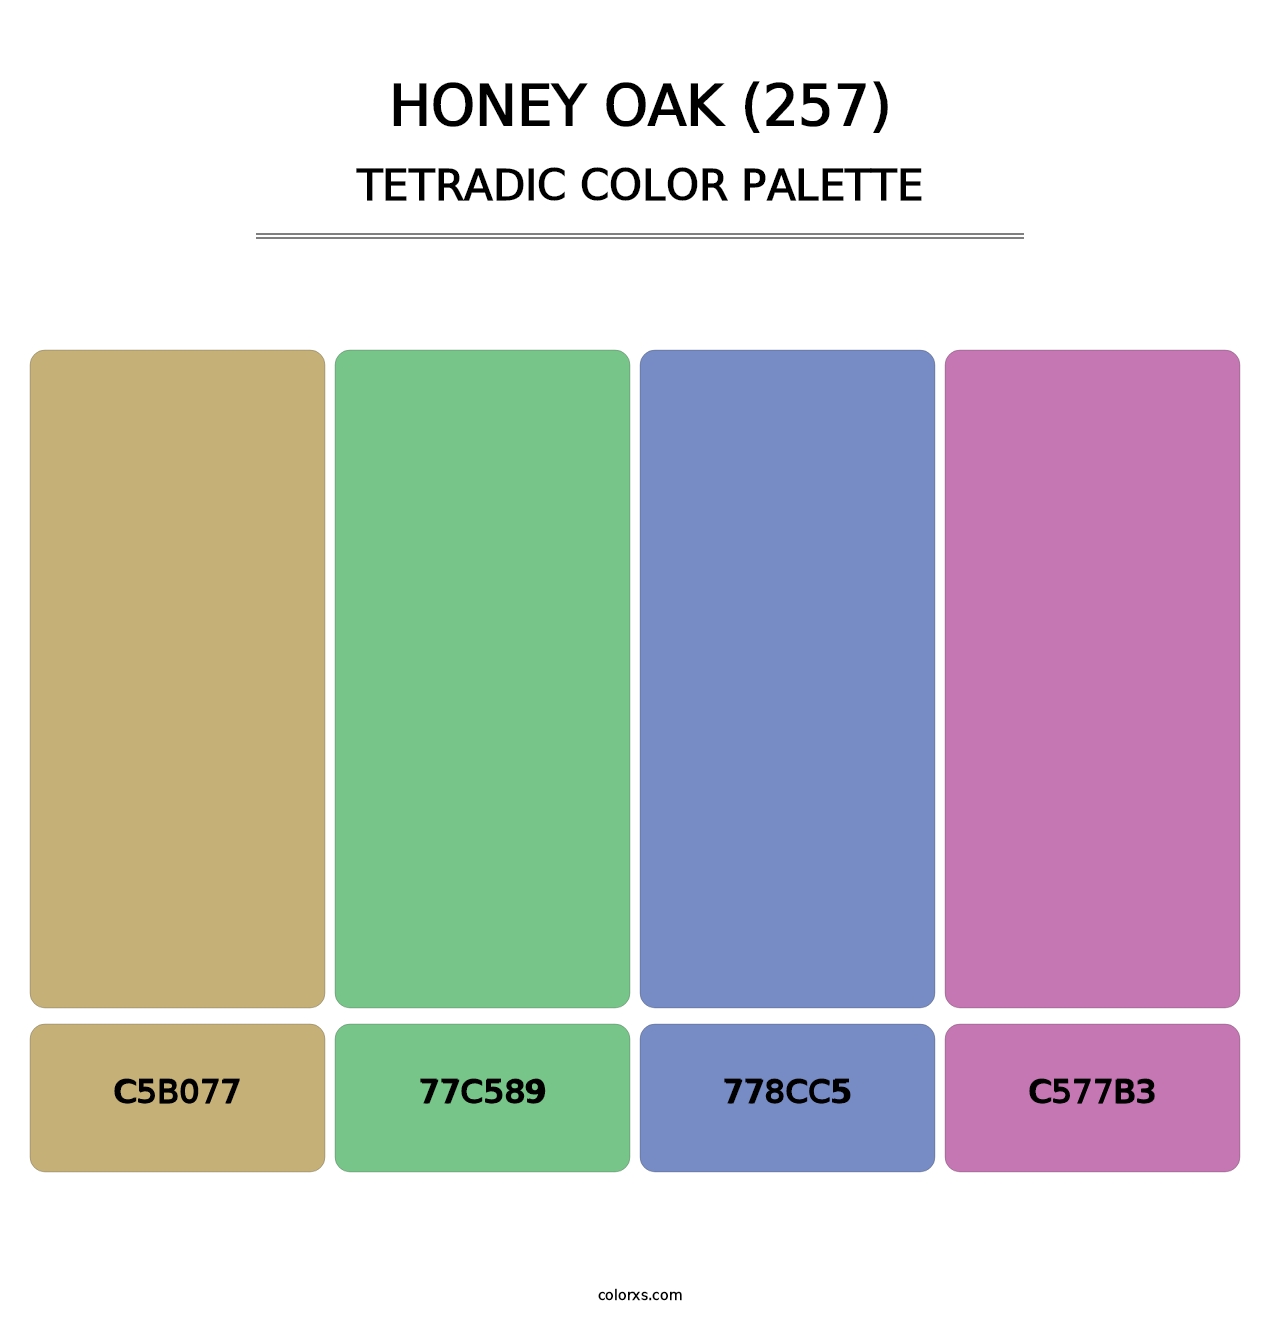 Honey Oak (257) - Tetradic Color Palette